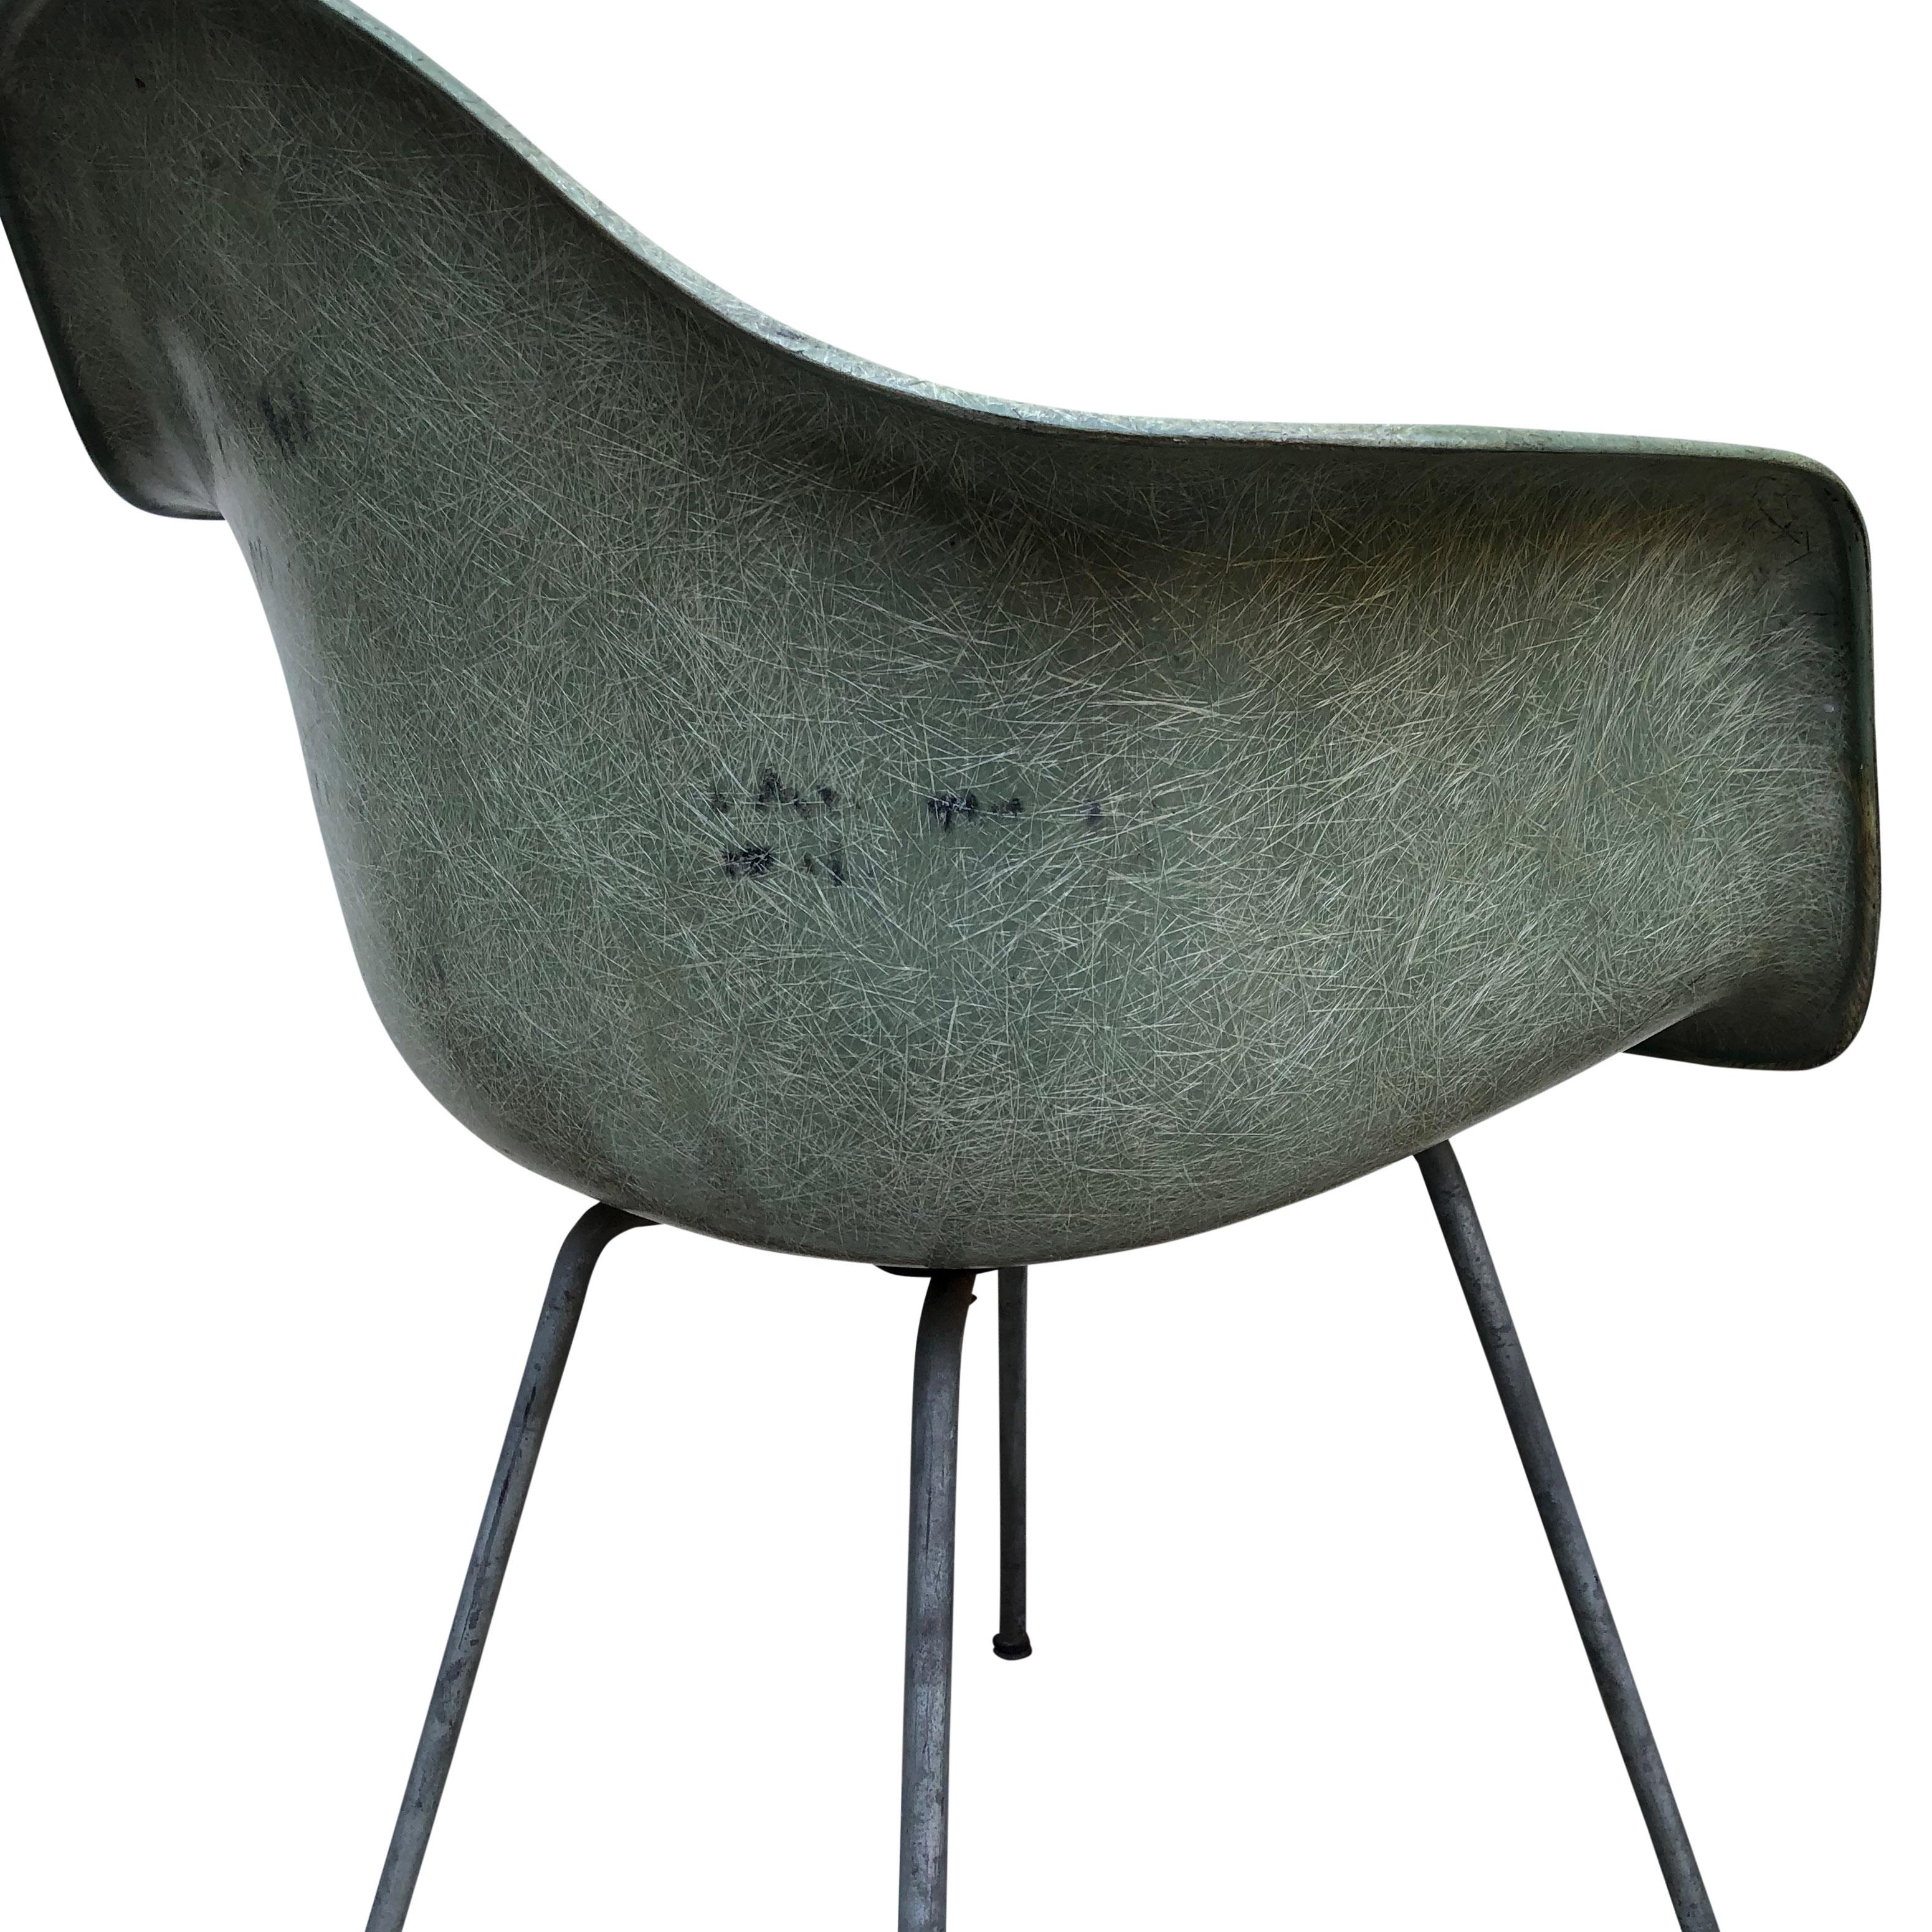 American 6 Eames Herman Miller Seafoam Green Zenith DAX Chair, Midcentury Collectible